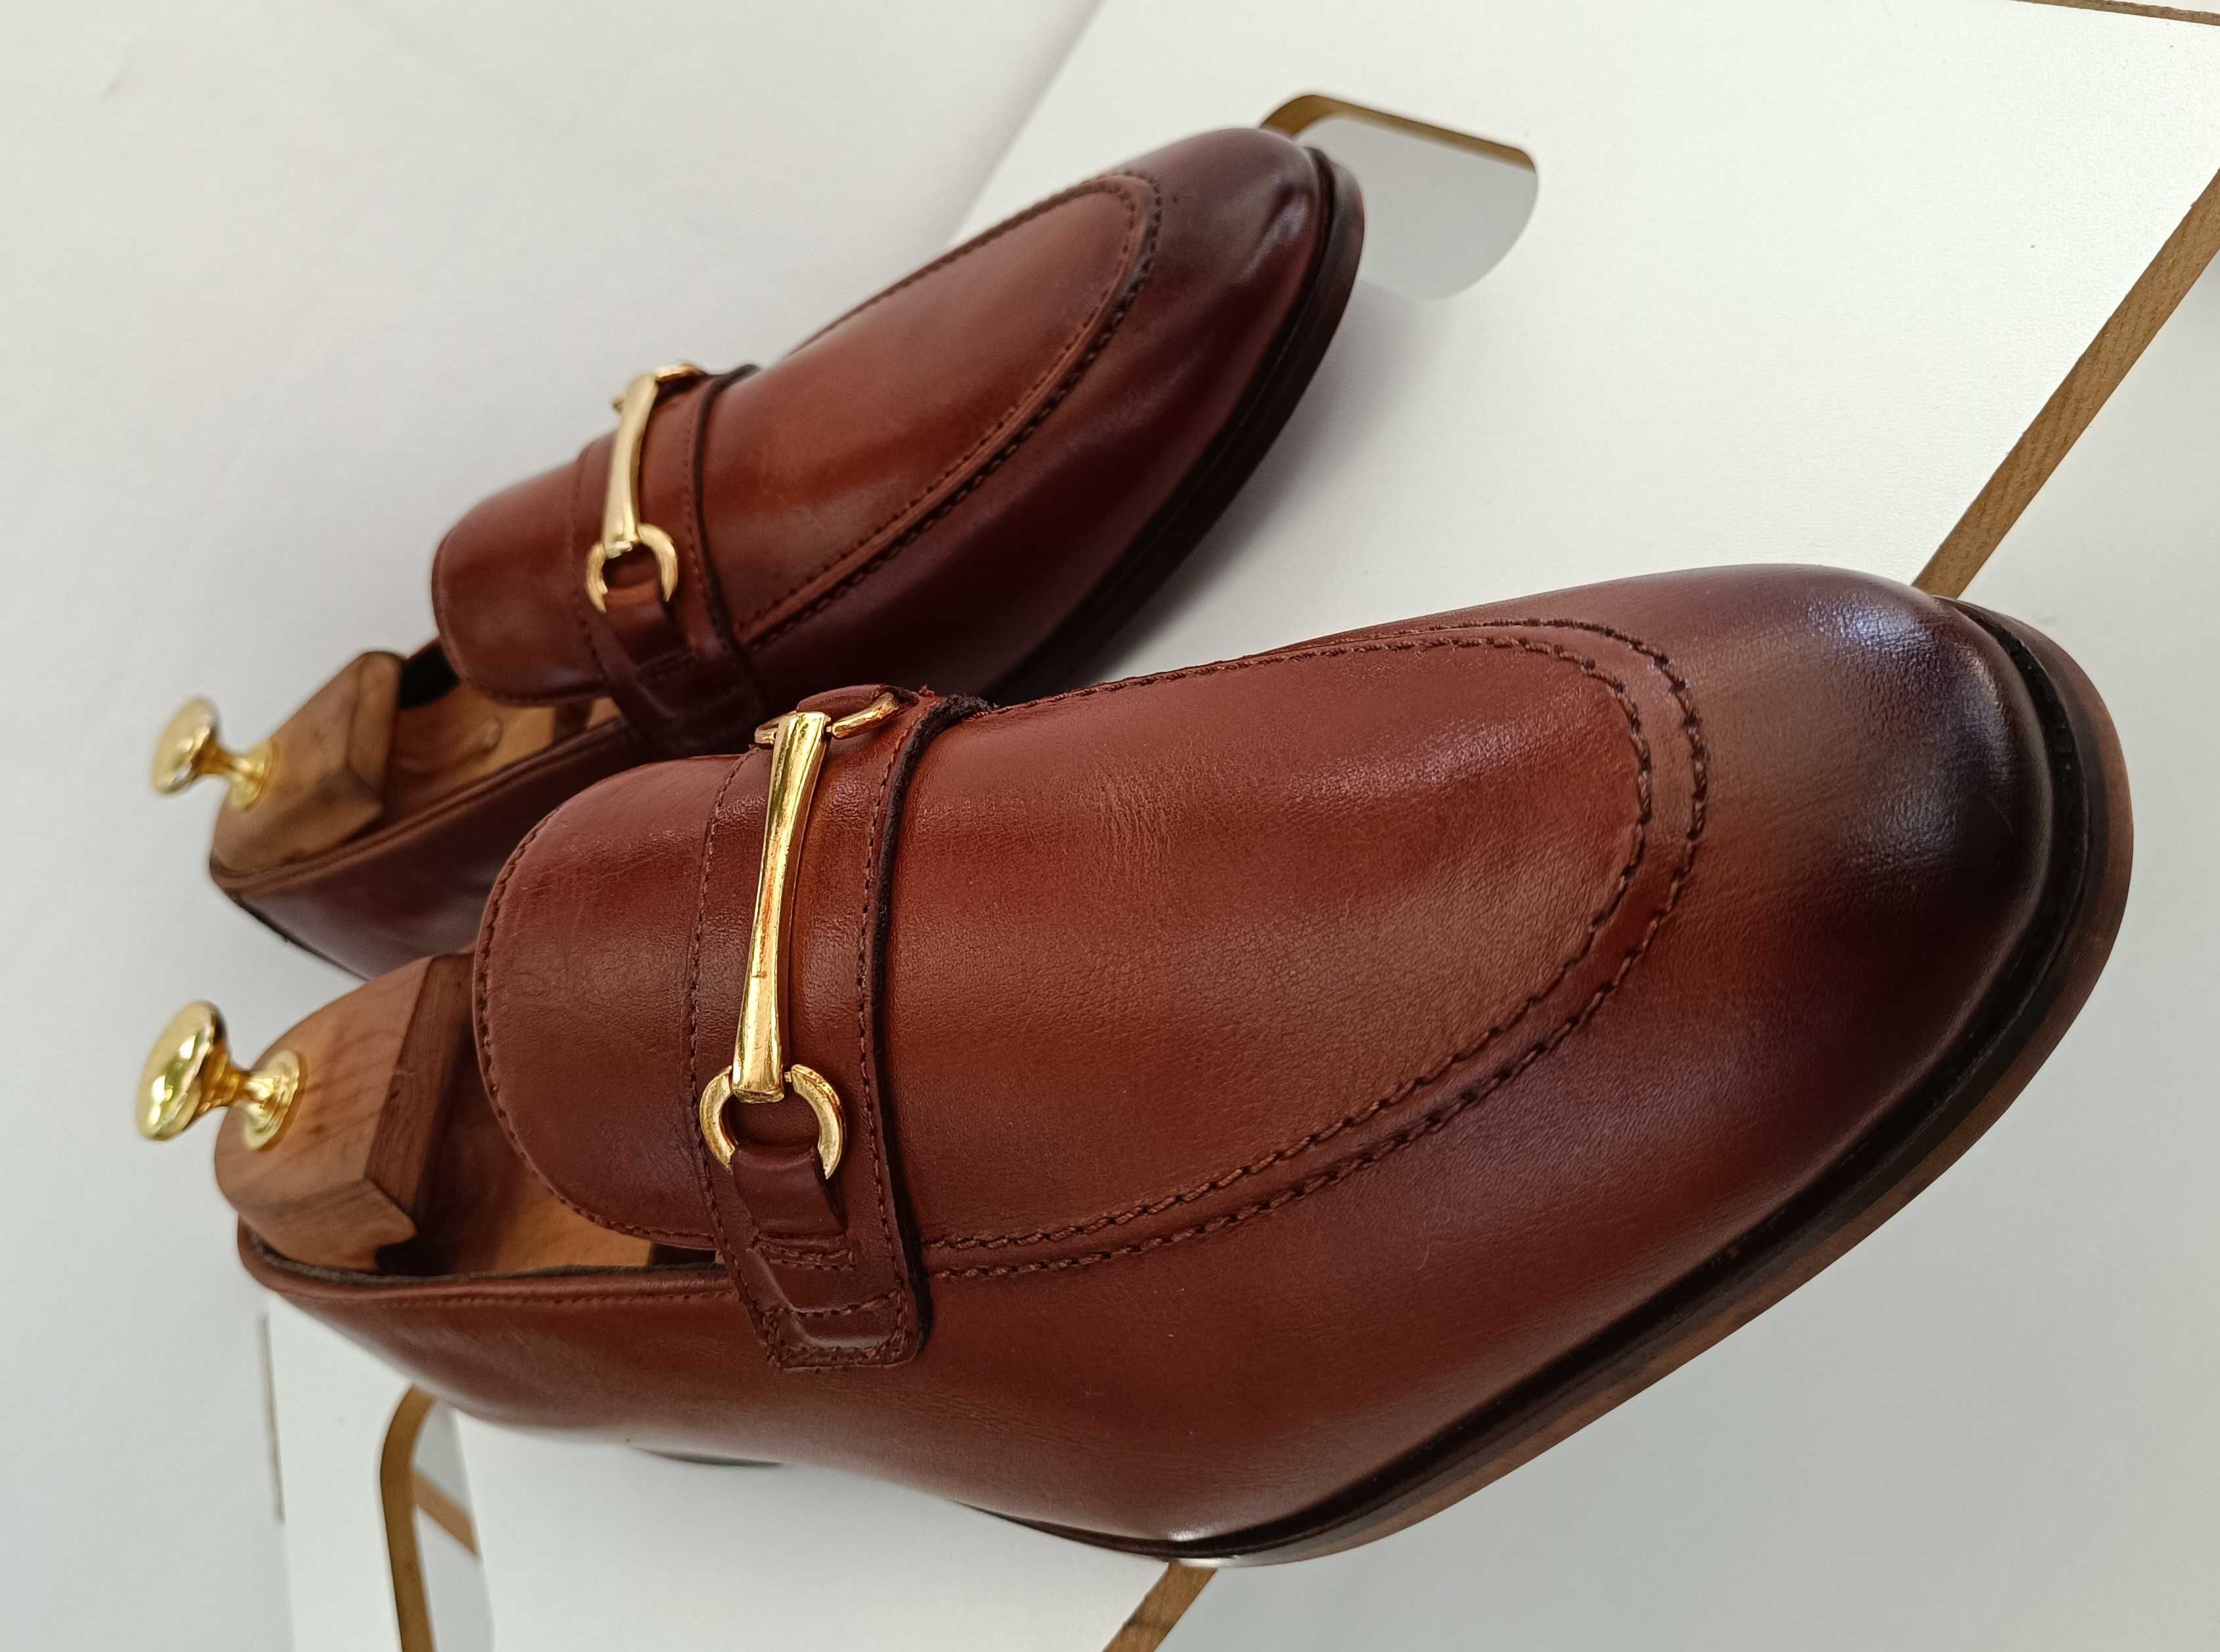 Pantofi loafers 43 bit premium ZIGN London NOU piele naturala